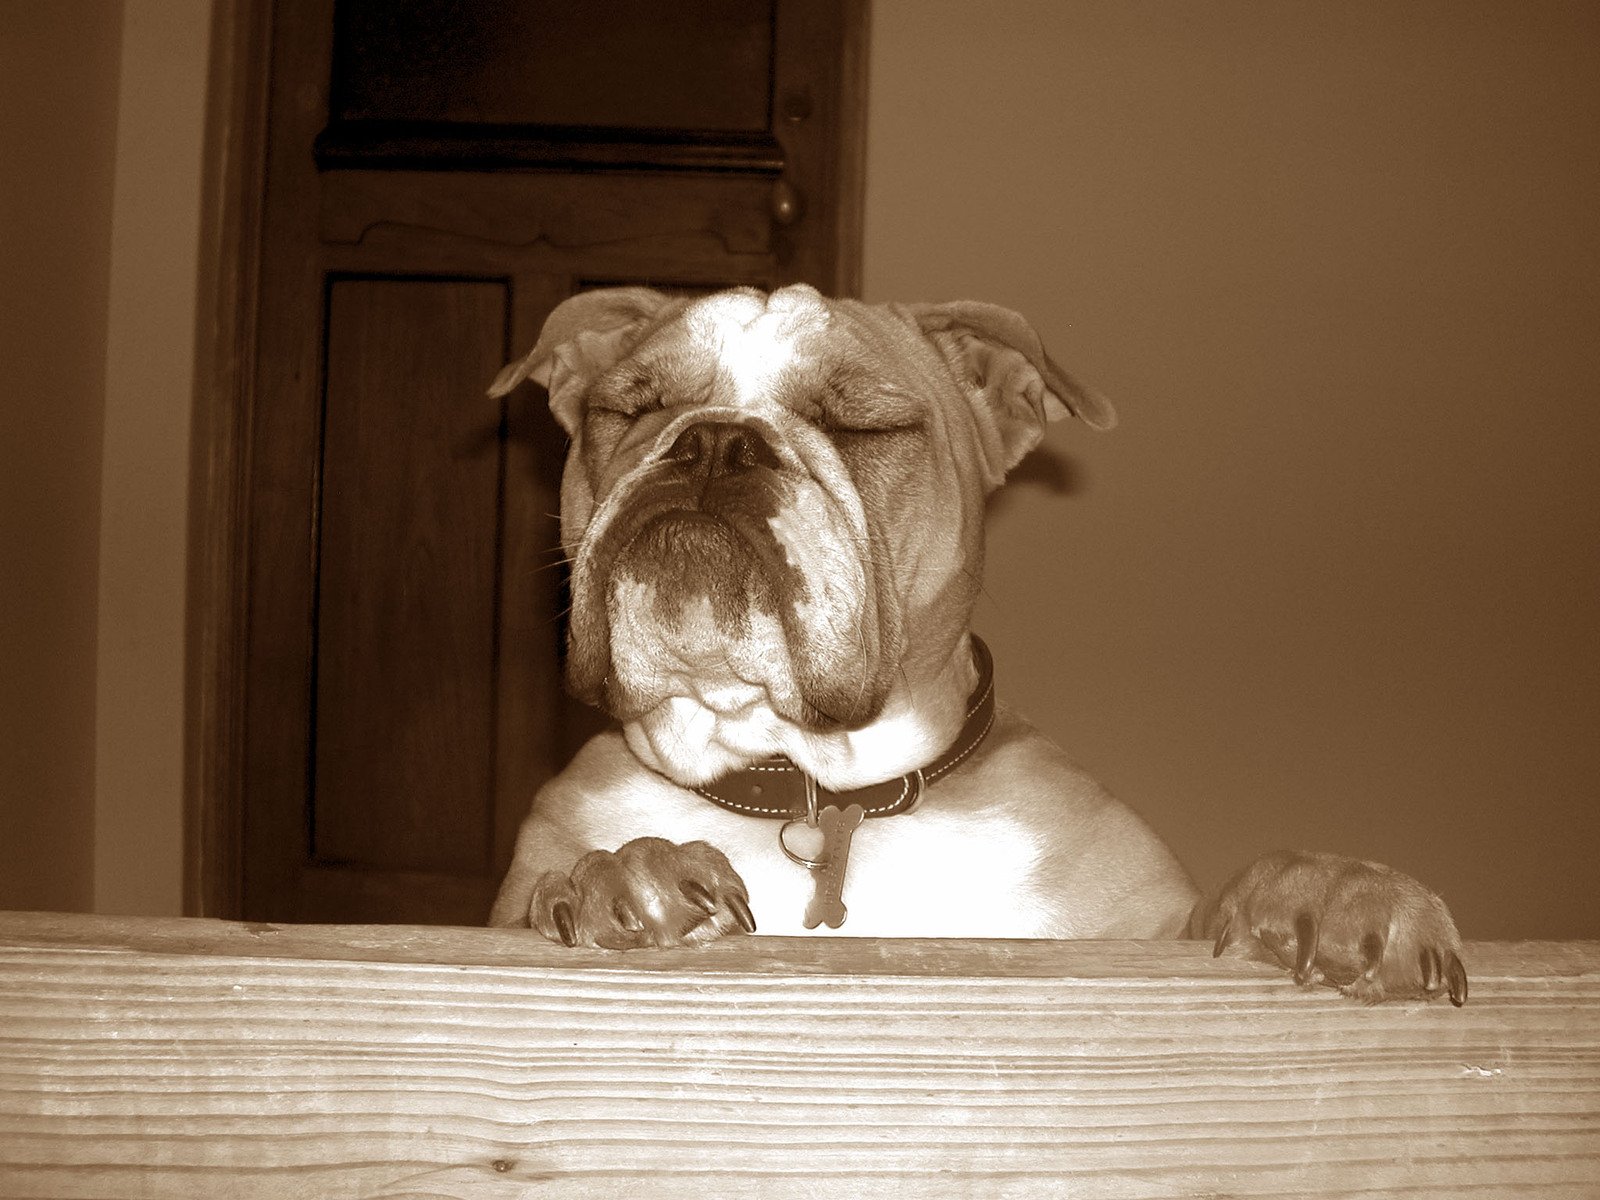 an old bulldog peeking over a wooden table